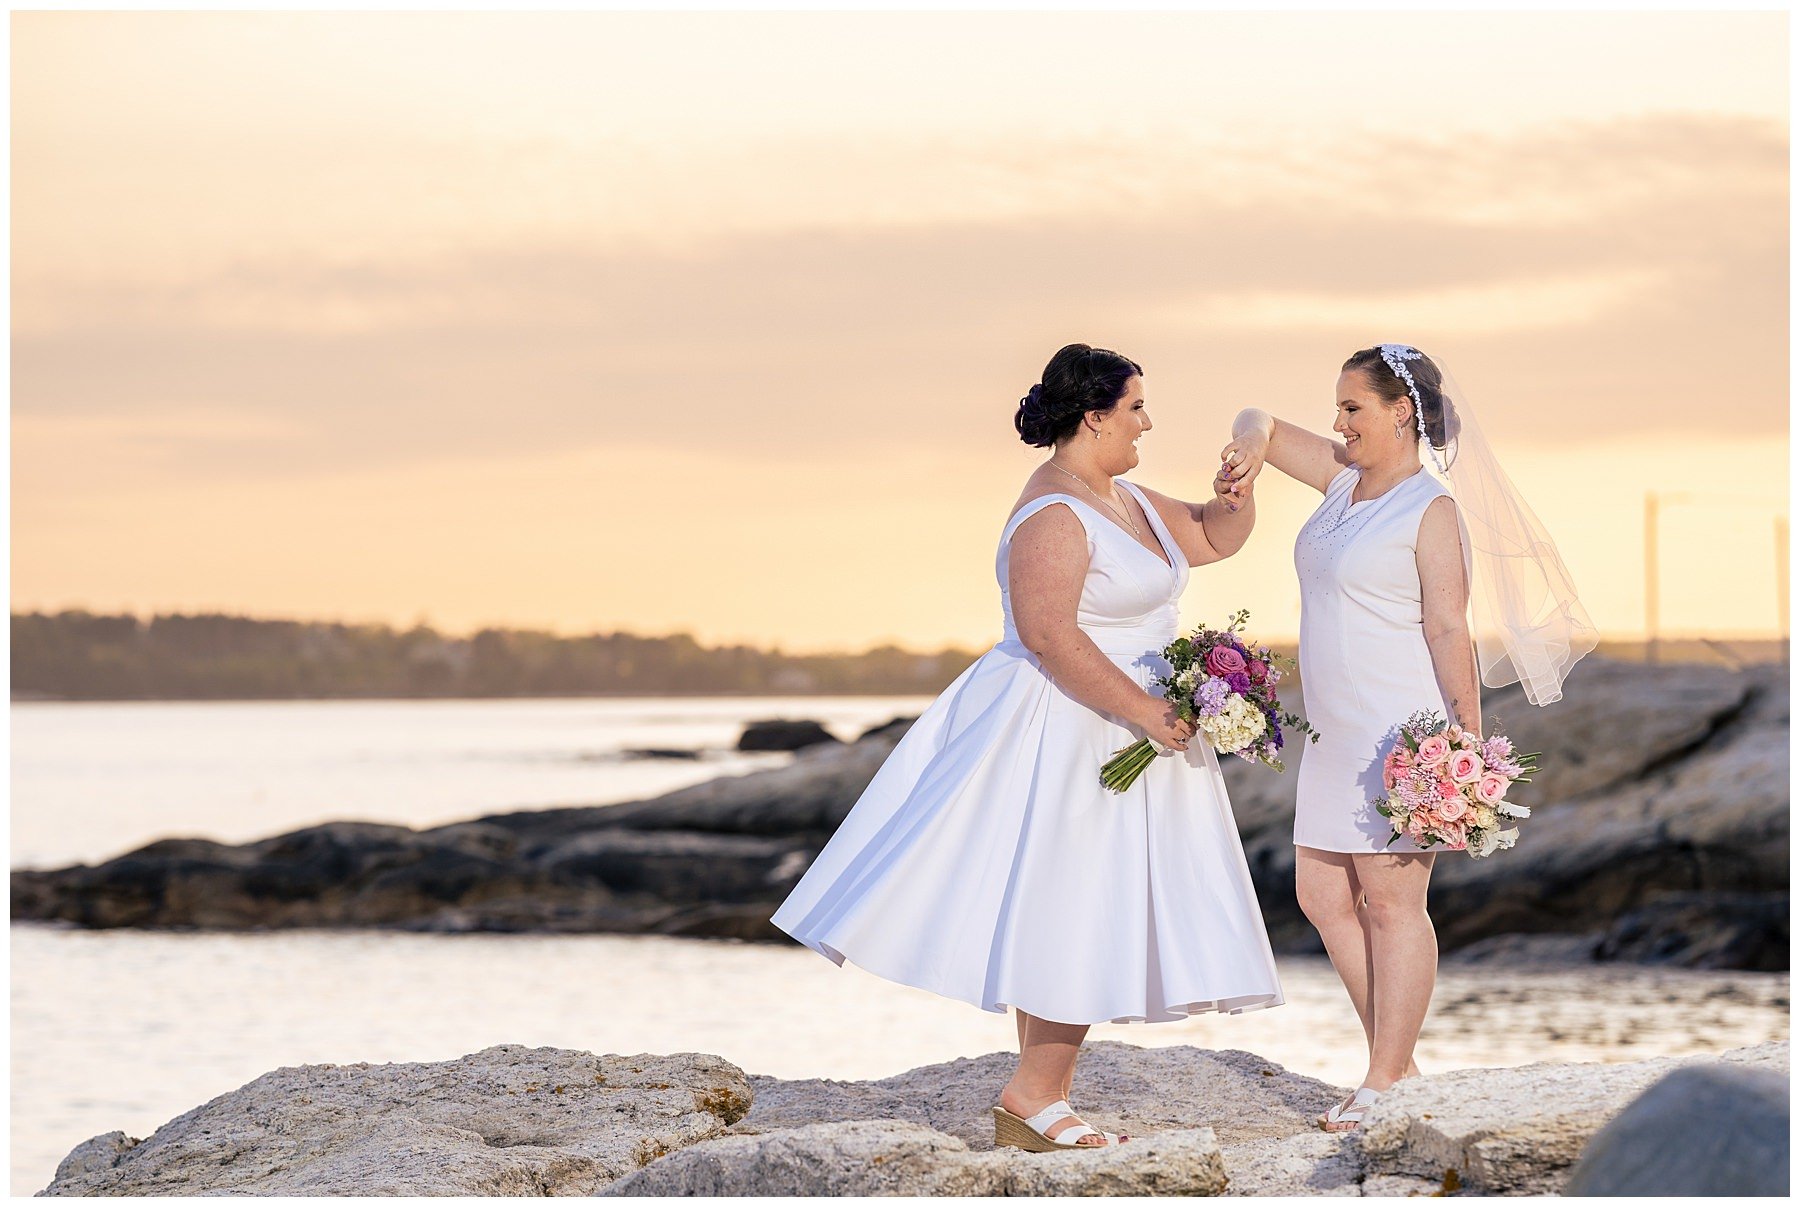 Boothbay Harbor Wedding Photographers, Two Adventurous Souls- 052422_0028.jpg